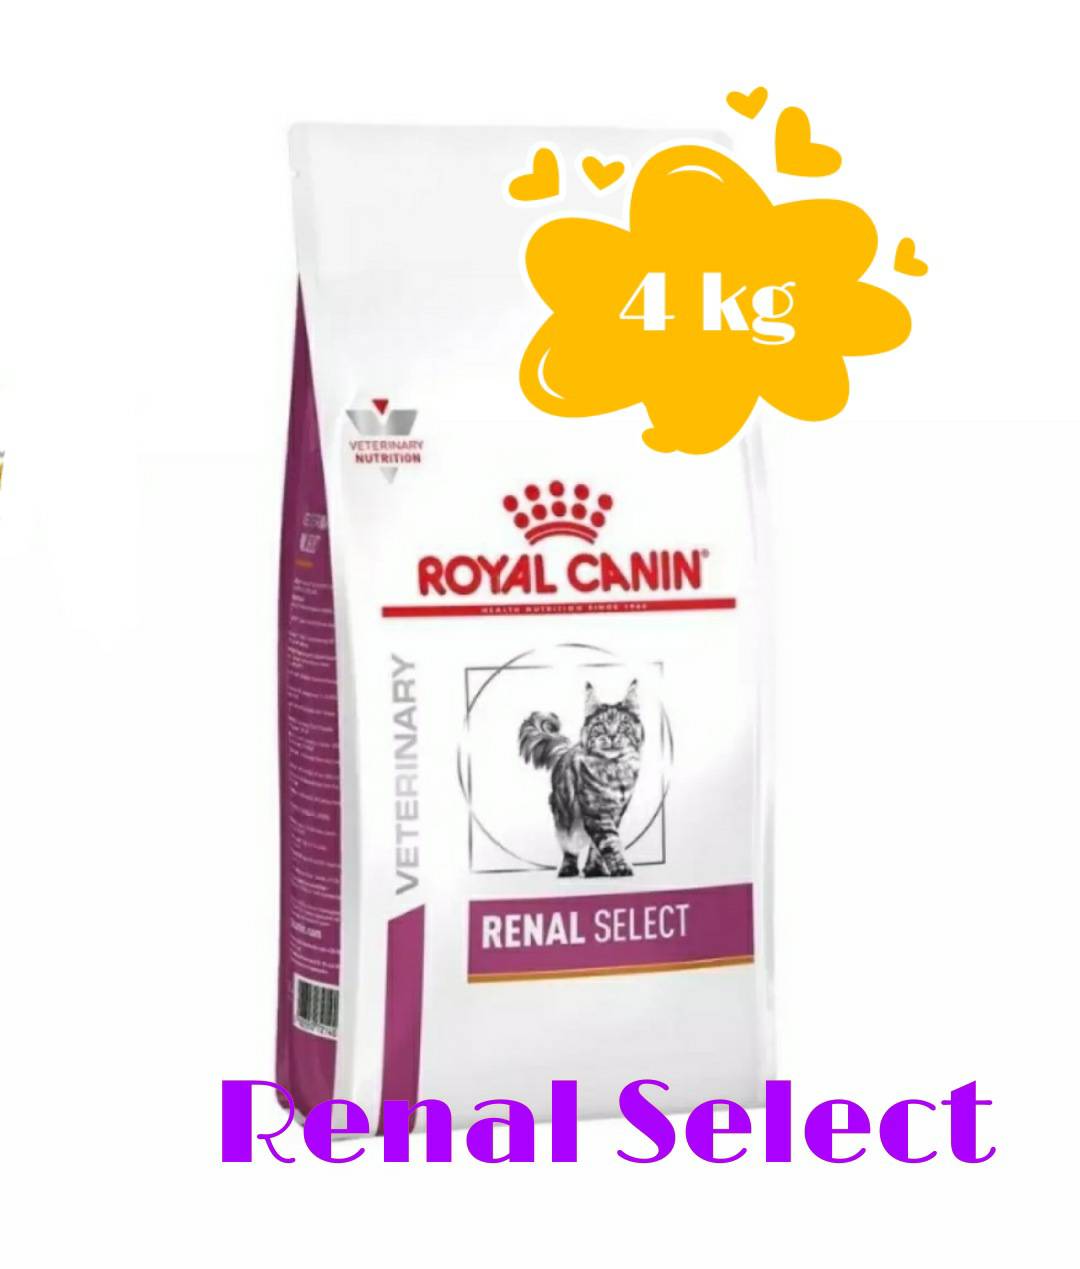 Royal Canin Renal Select Feline อาหารแมว ขนาด 4 kg 